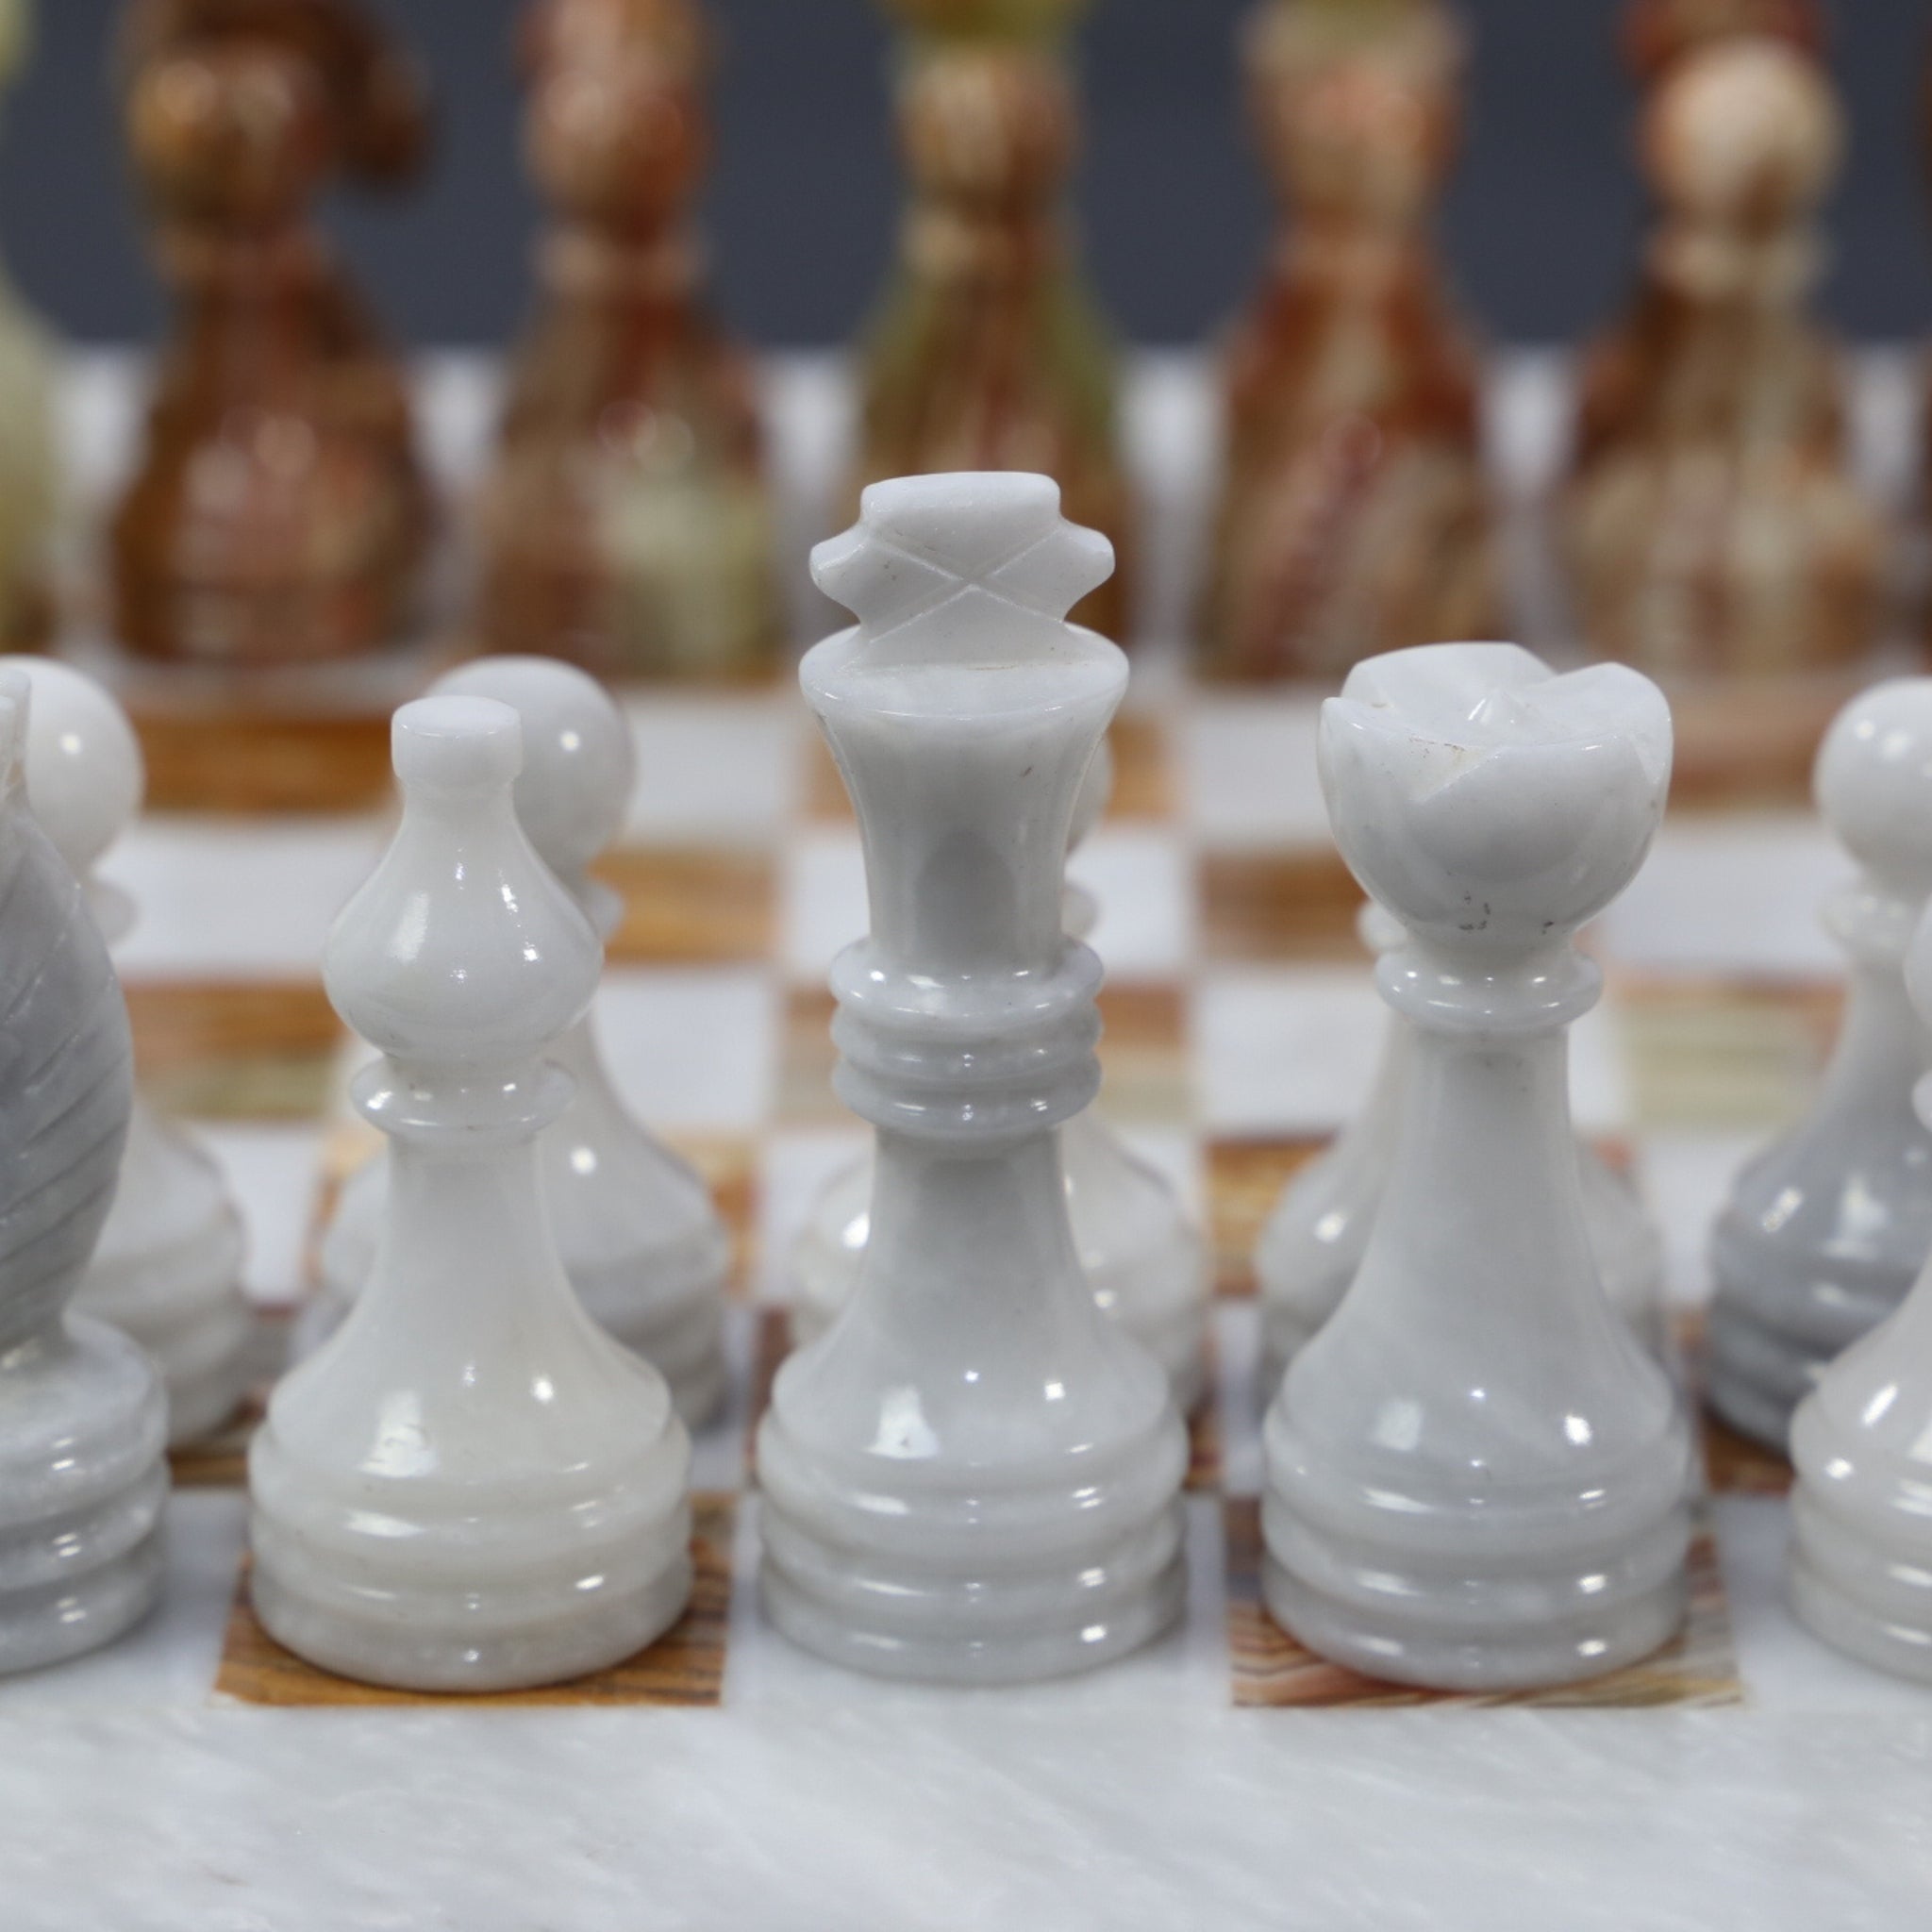 Onyx and White Marble Handmade Chess Set 12''